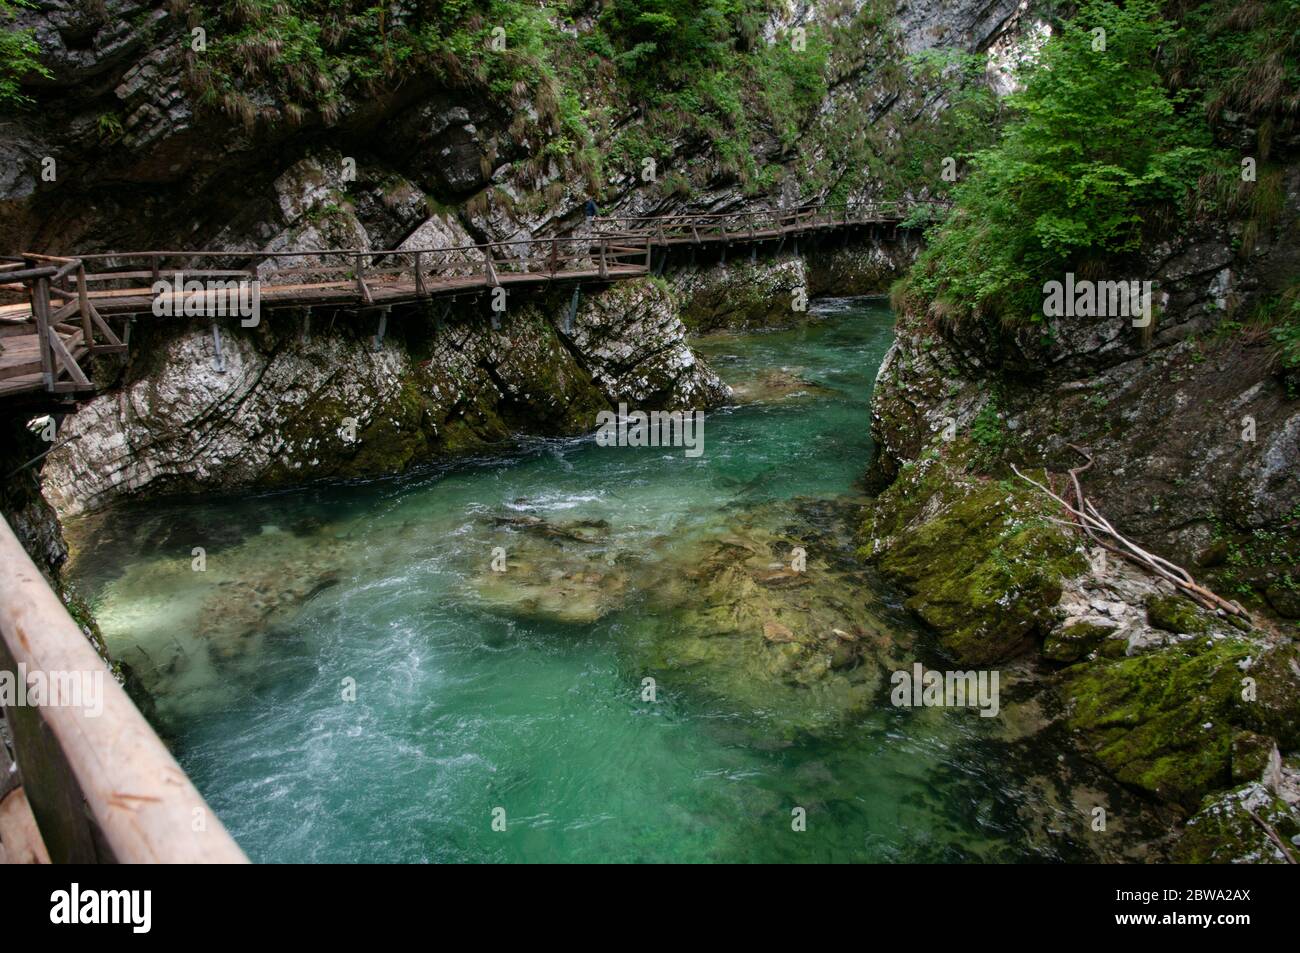 Clean river water goes through mountains, wooden bridges around. Slovenia, Vintgar gore near lake Bled. Stock Photo